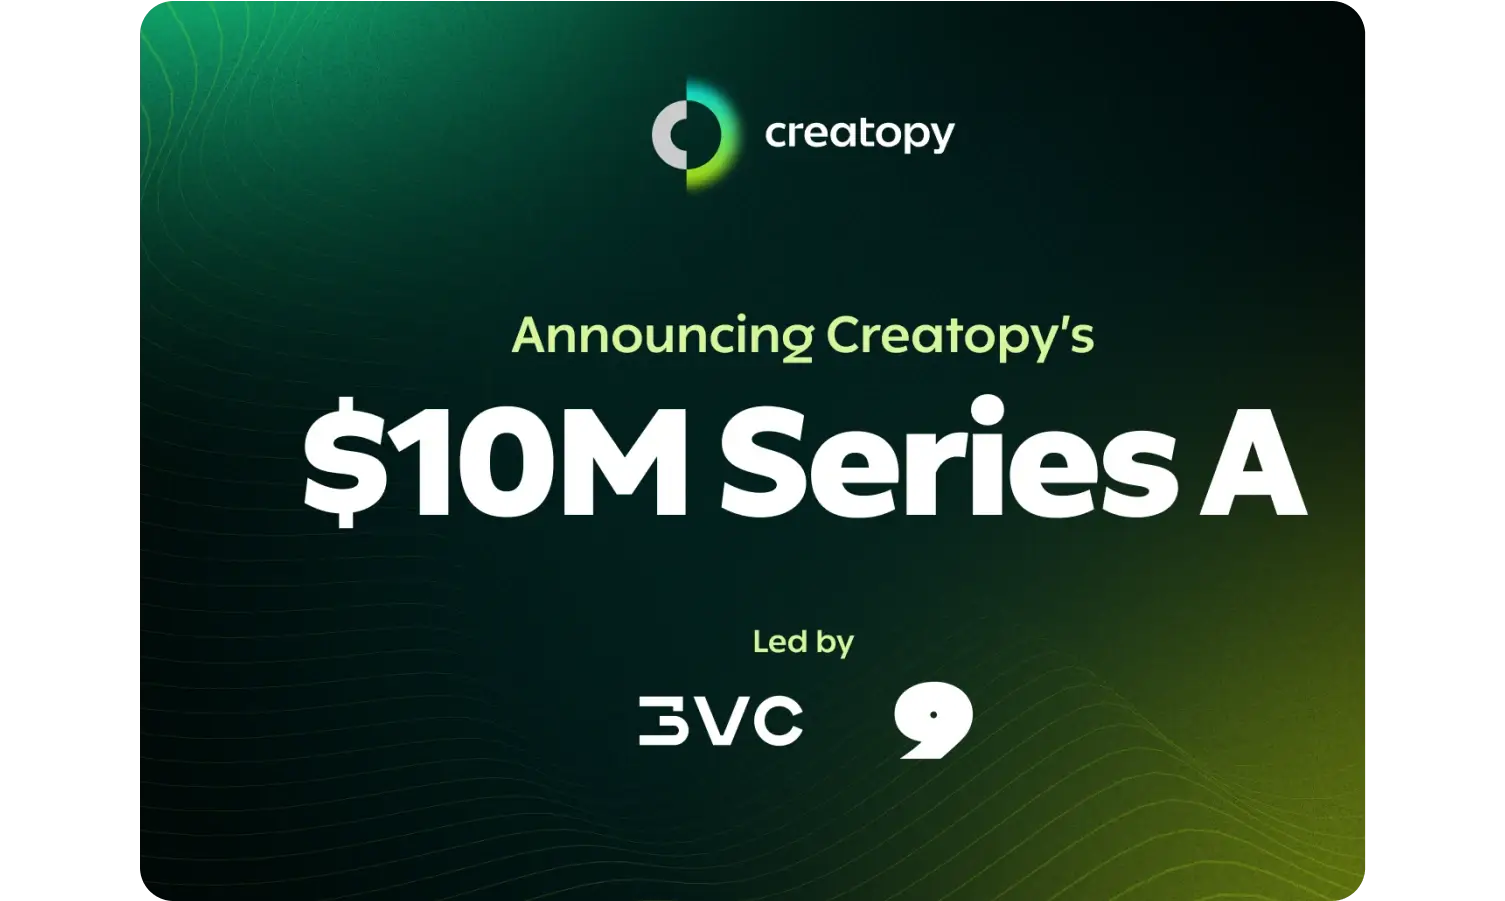 10 million series A announcement